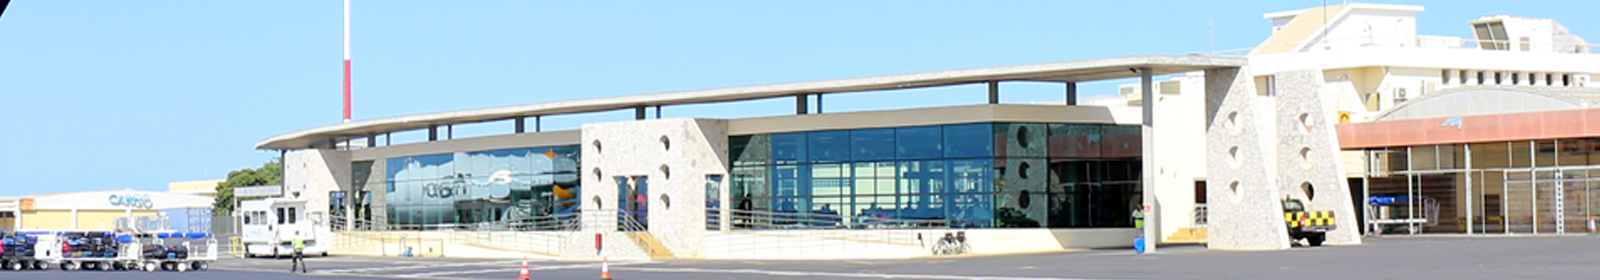 Aeroporto do Sal – ASA Aeroportos e Segurança Aérea